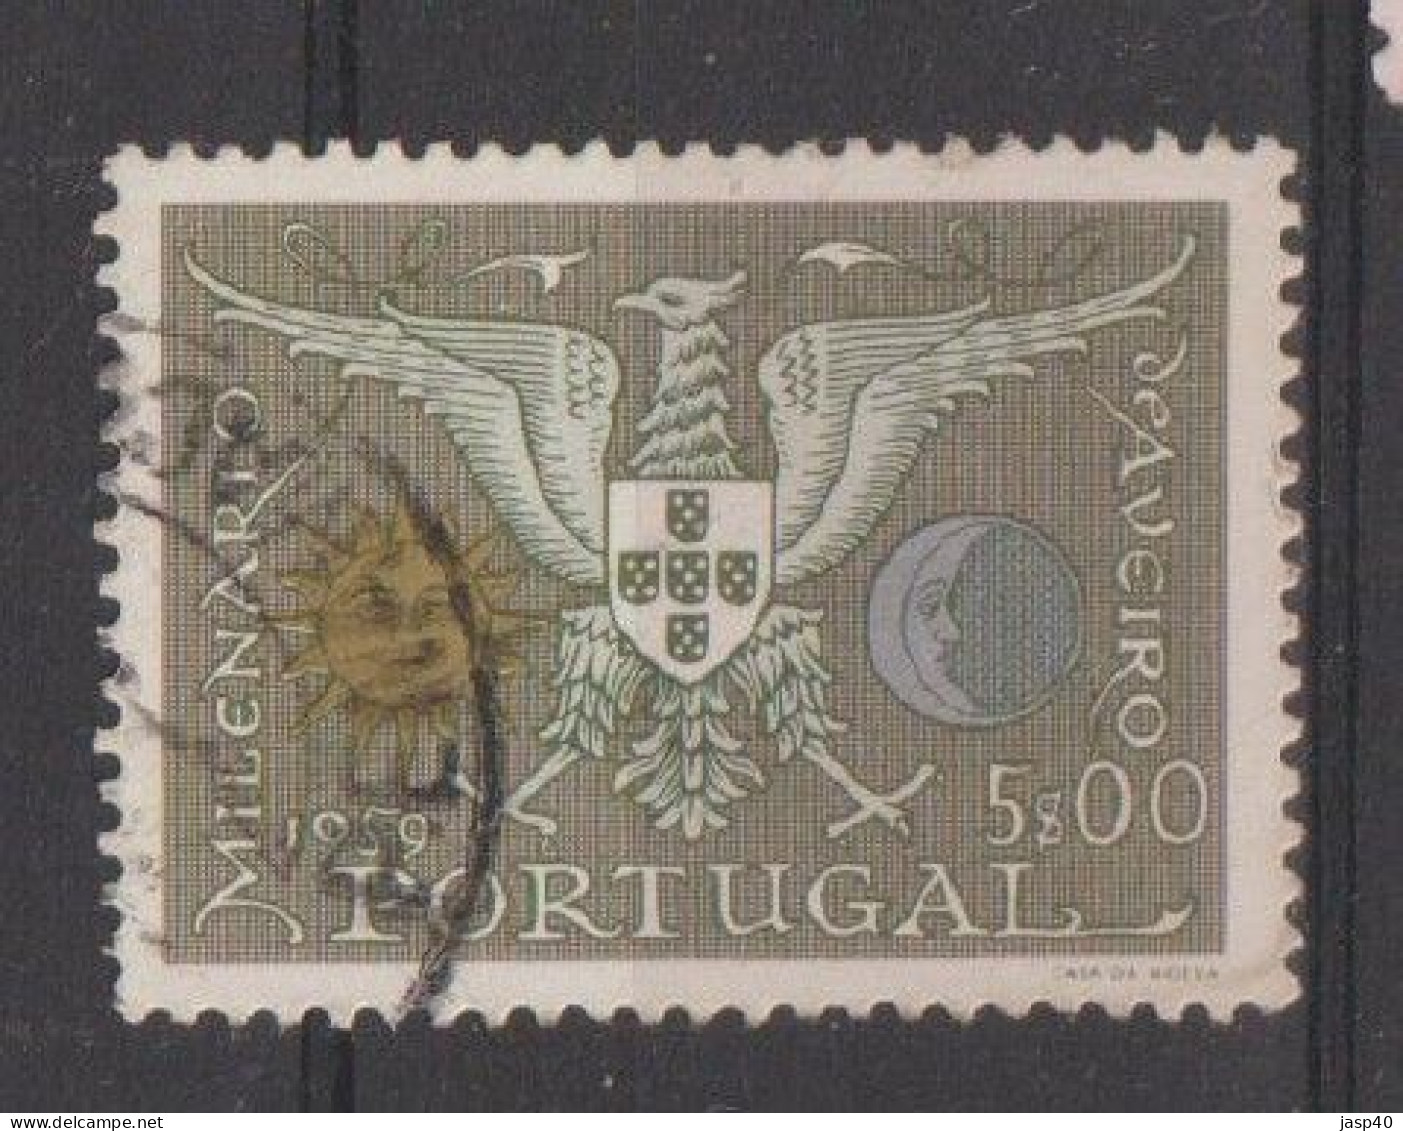 PORTUGAL 848 - POSTMARKS OF PORTUGAL - PENAMACOR - Used Stamps